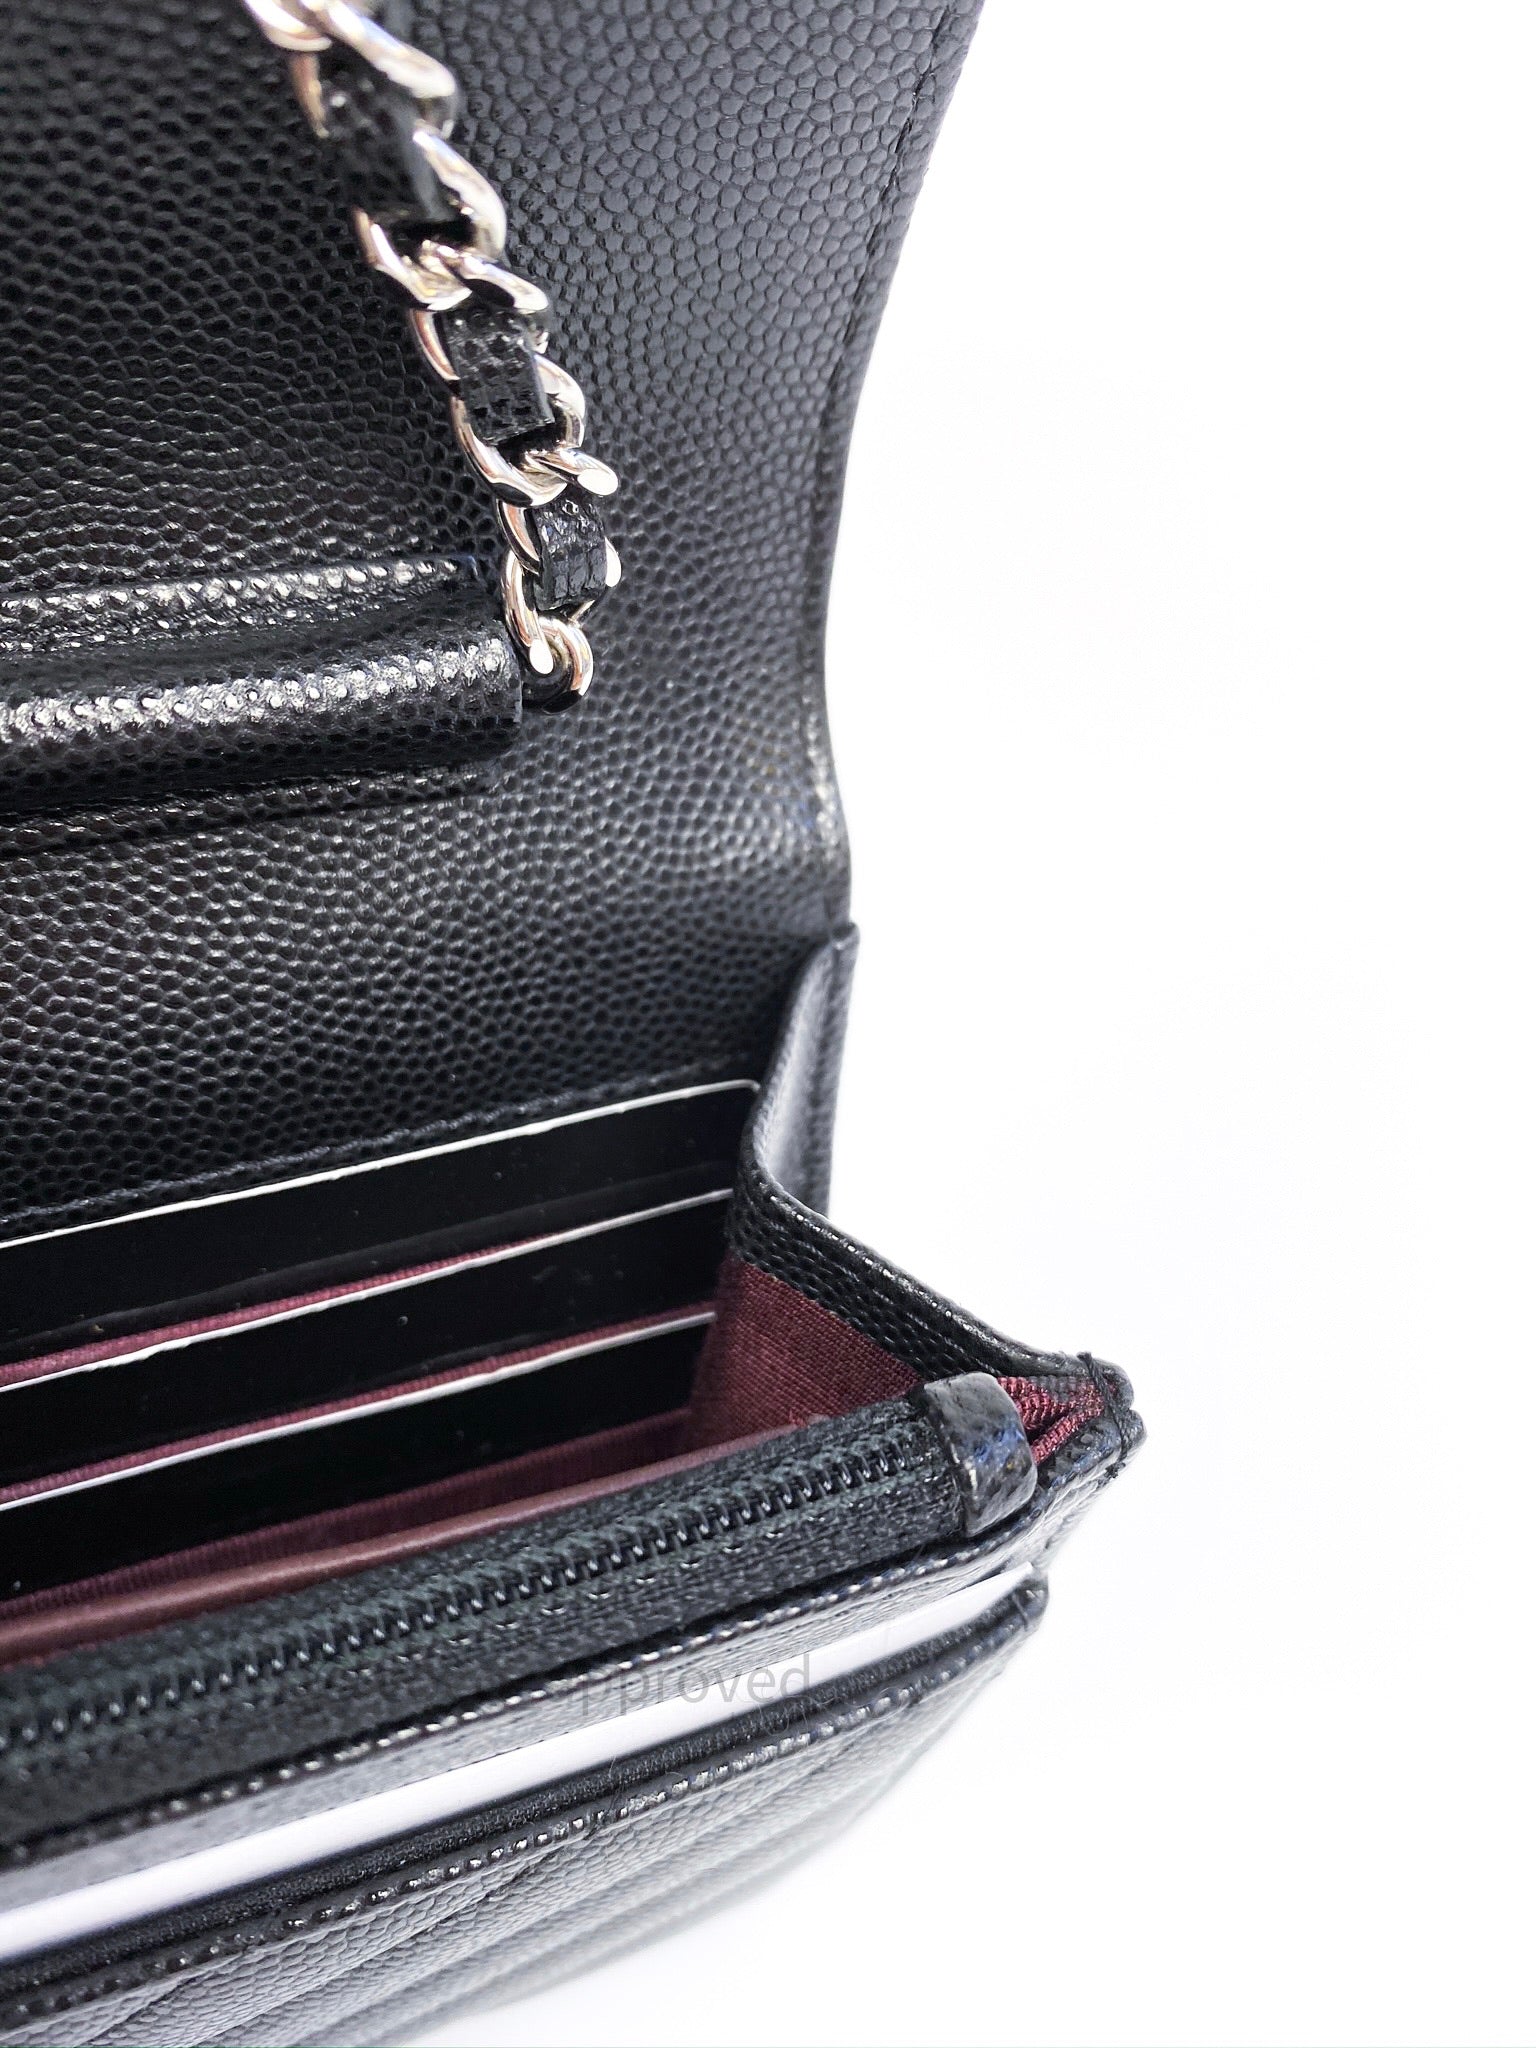 heart chanel purse black